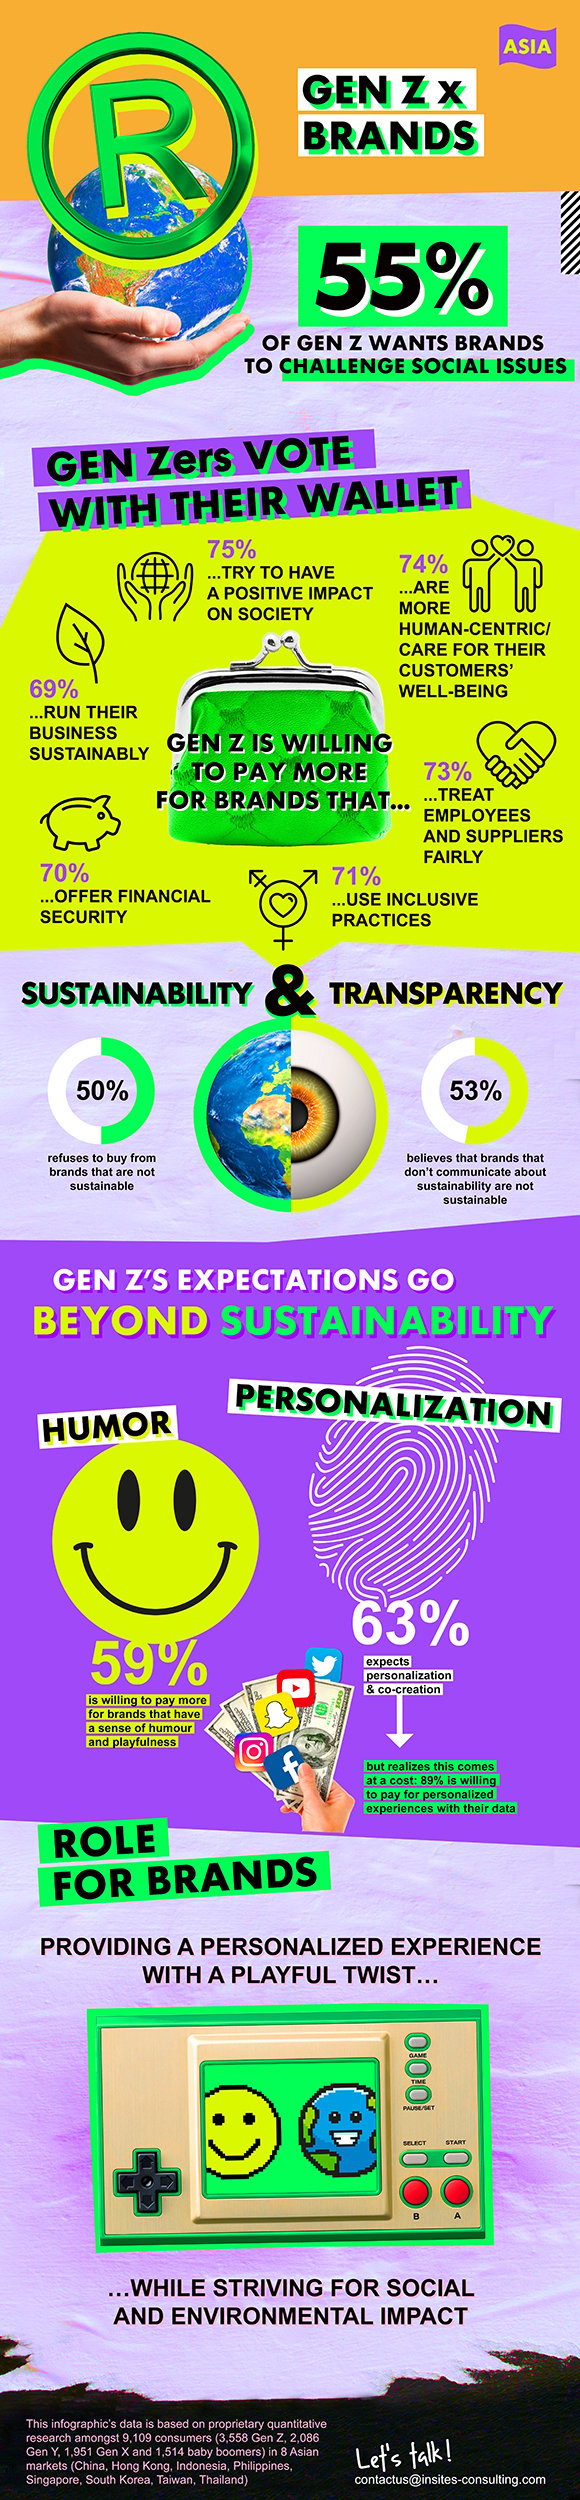 Gen Z x Brands Infographic Asia